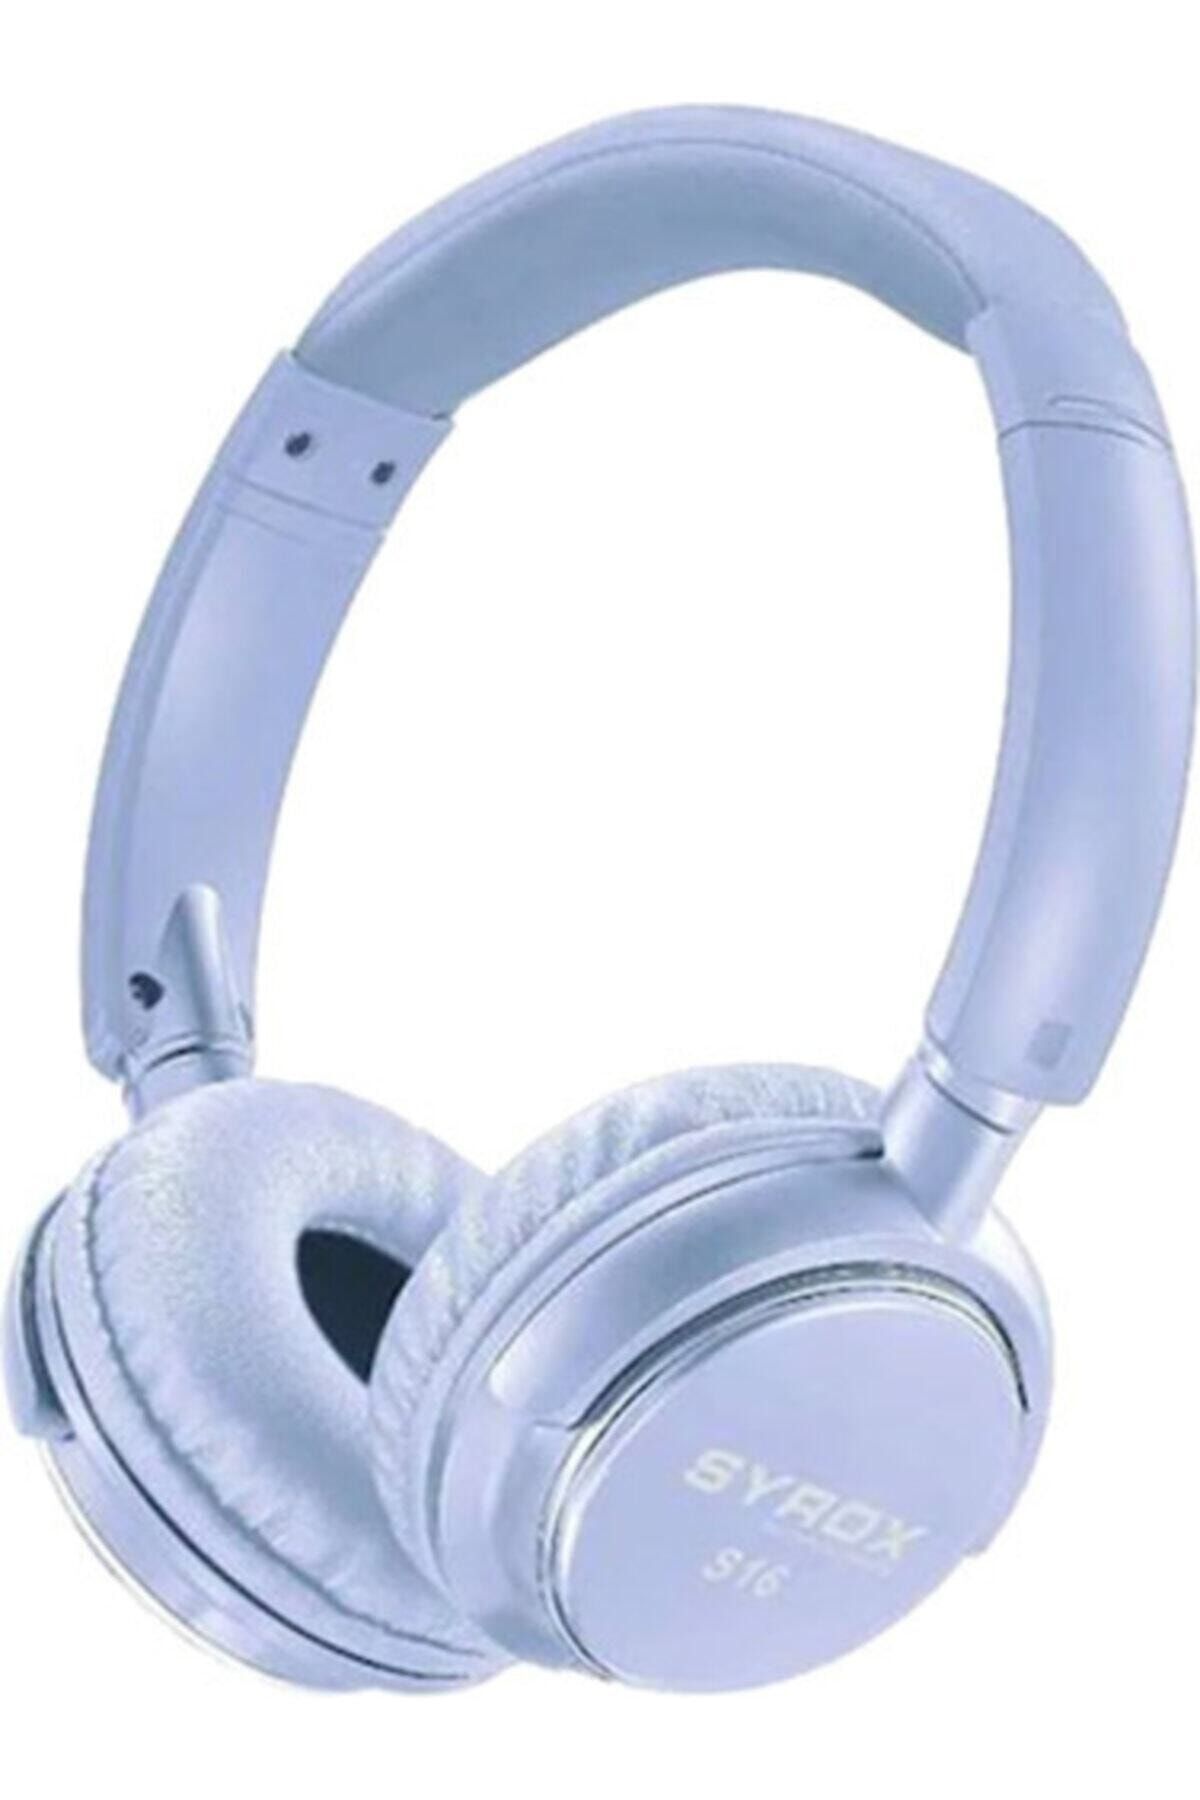 Syrox Kulaküstü Kablosuz Bluetooth Kulaklık Hafıza Kartı Girişli S16